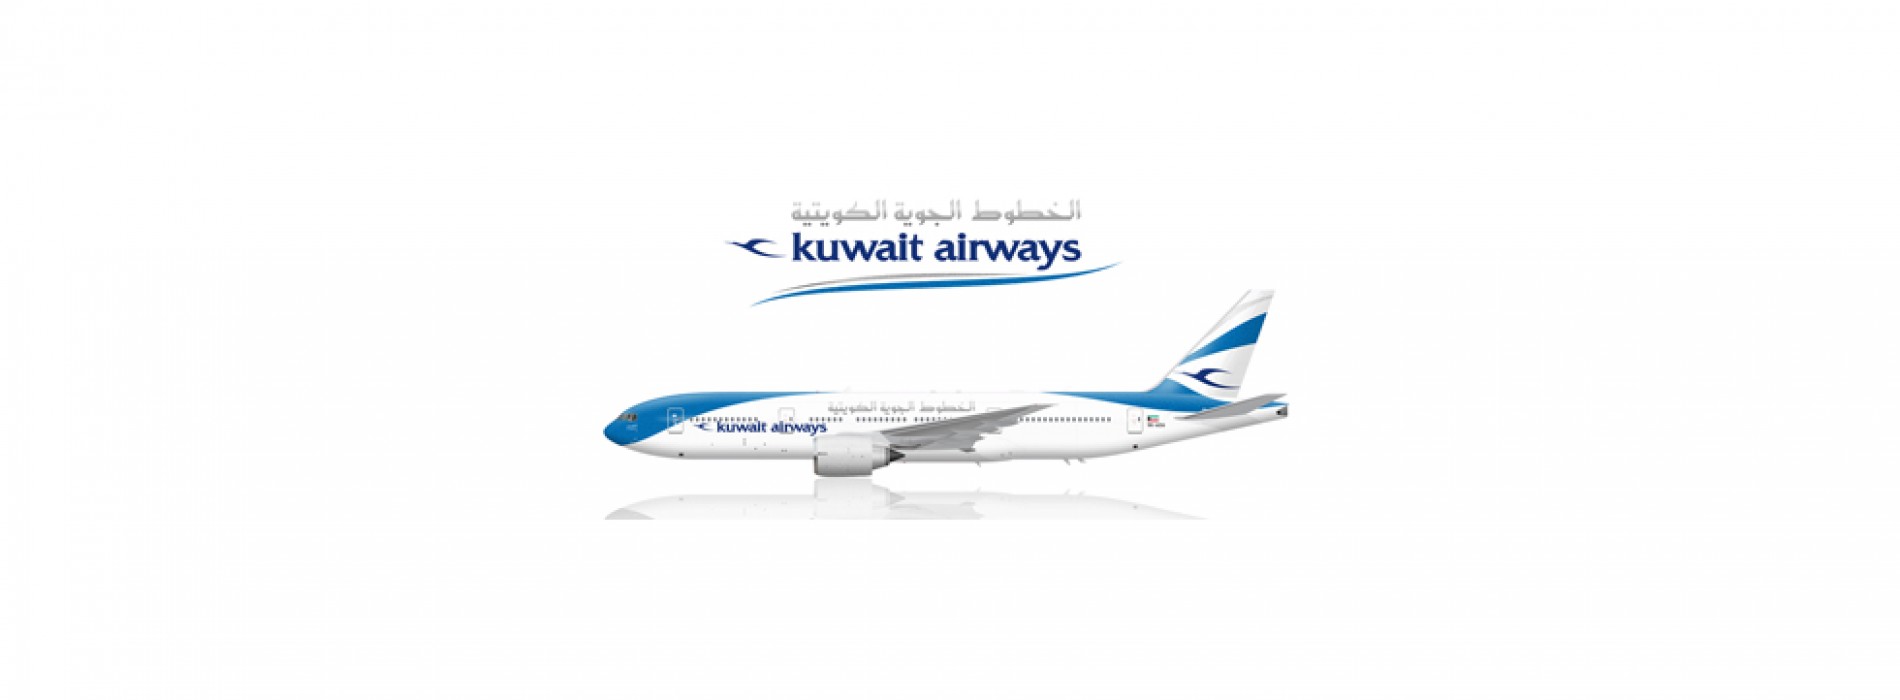 Kuwait Airways inks deal with Amadeus